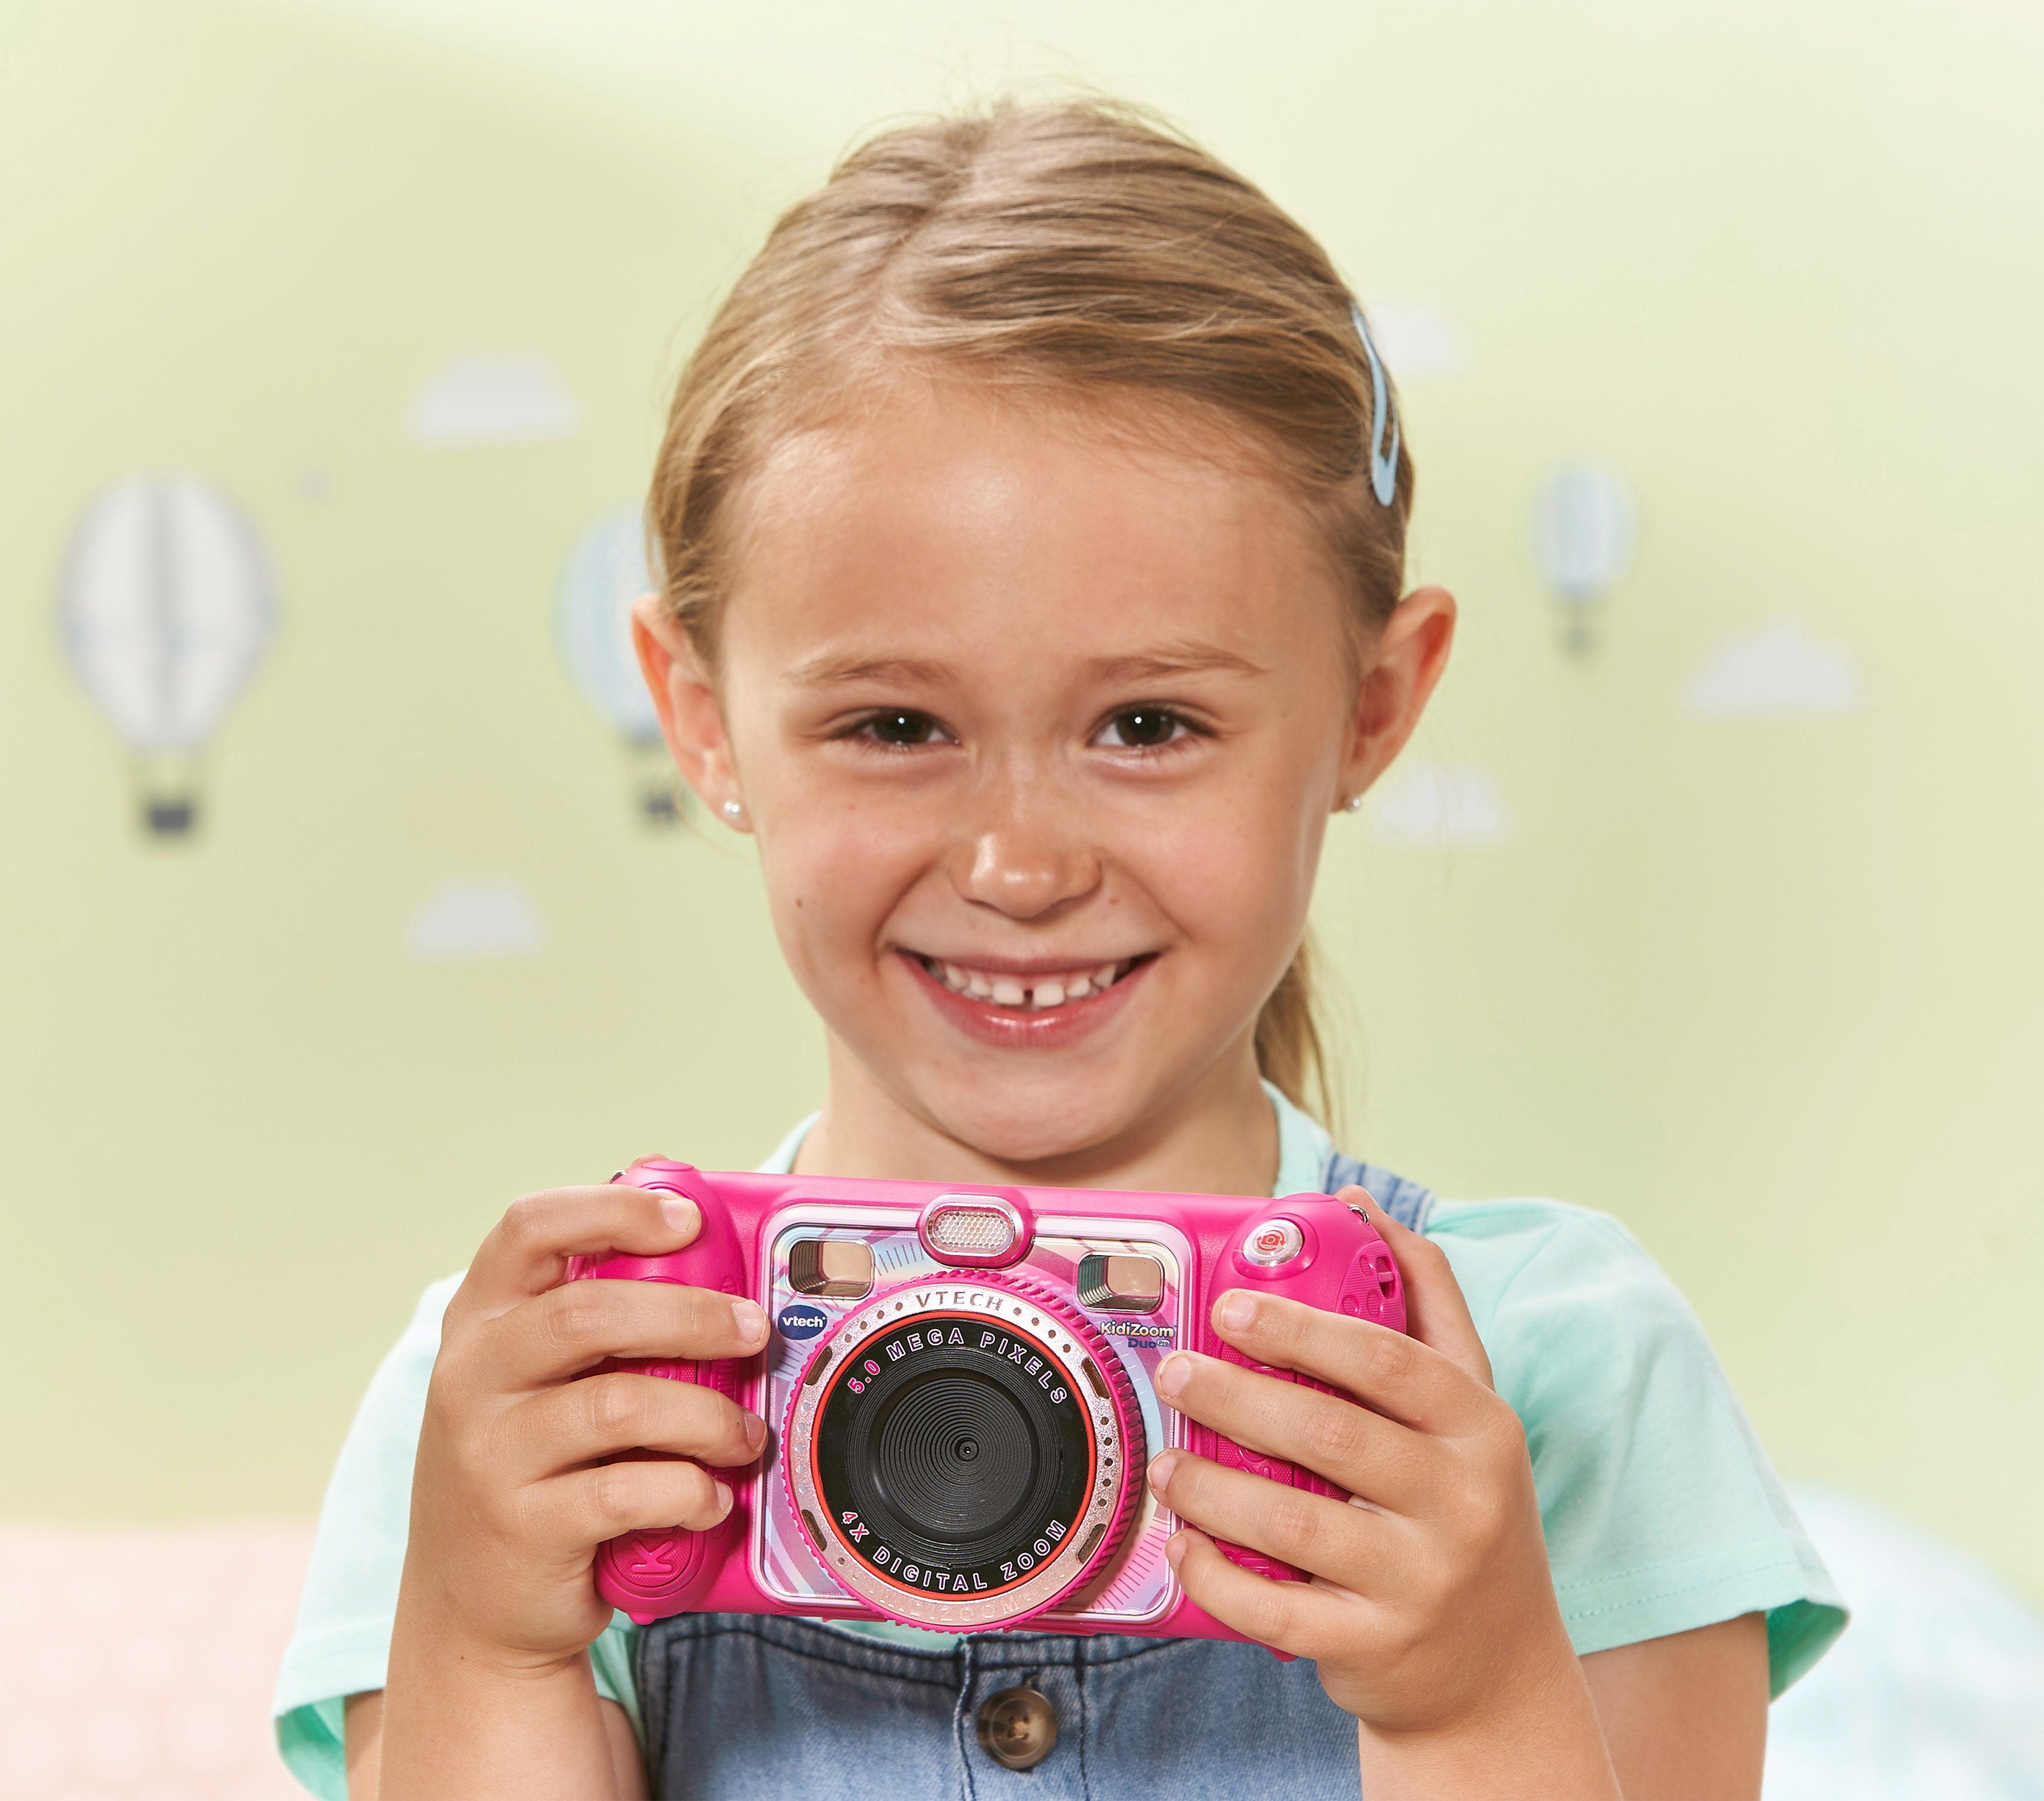 Kopfhörer) Vtech® (inkluisve KidiZoom Pro pink Duo Kinderkamera